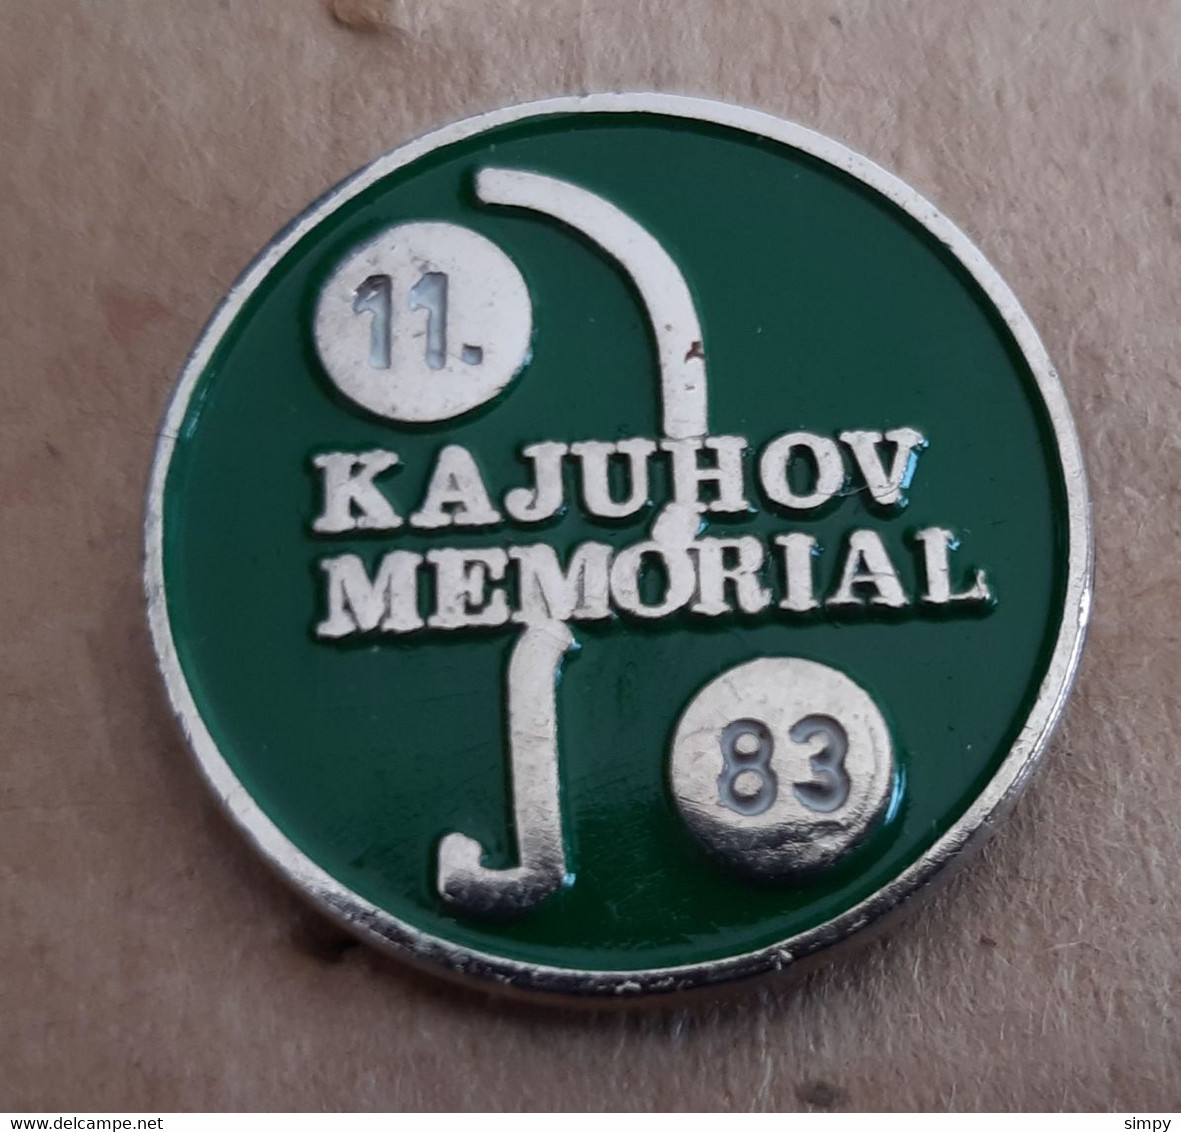 Table Tennis Tournament 11. Kajuhov Memorial  1983 Slovenia Pin Badge - Tennis De Table